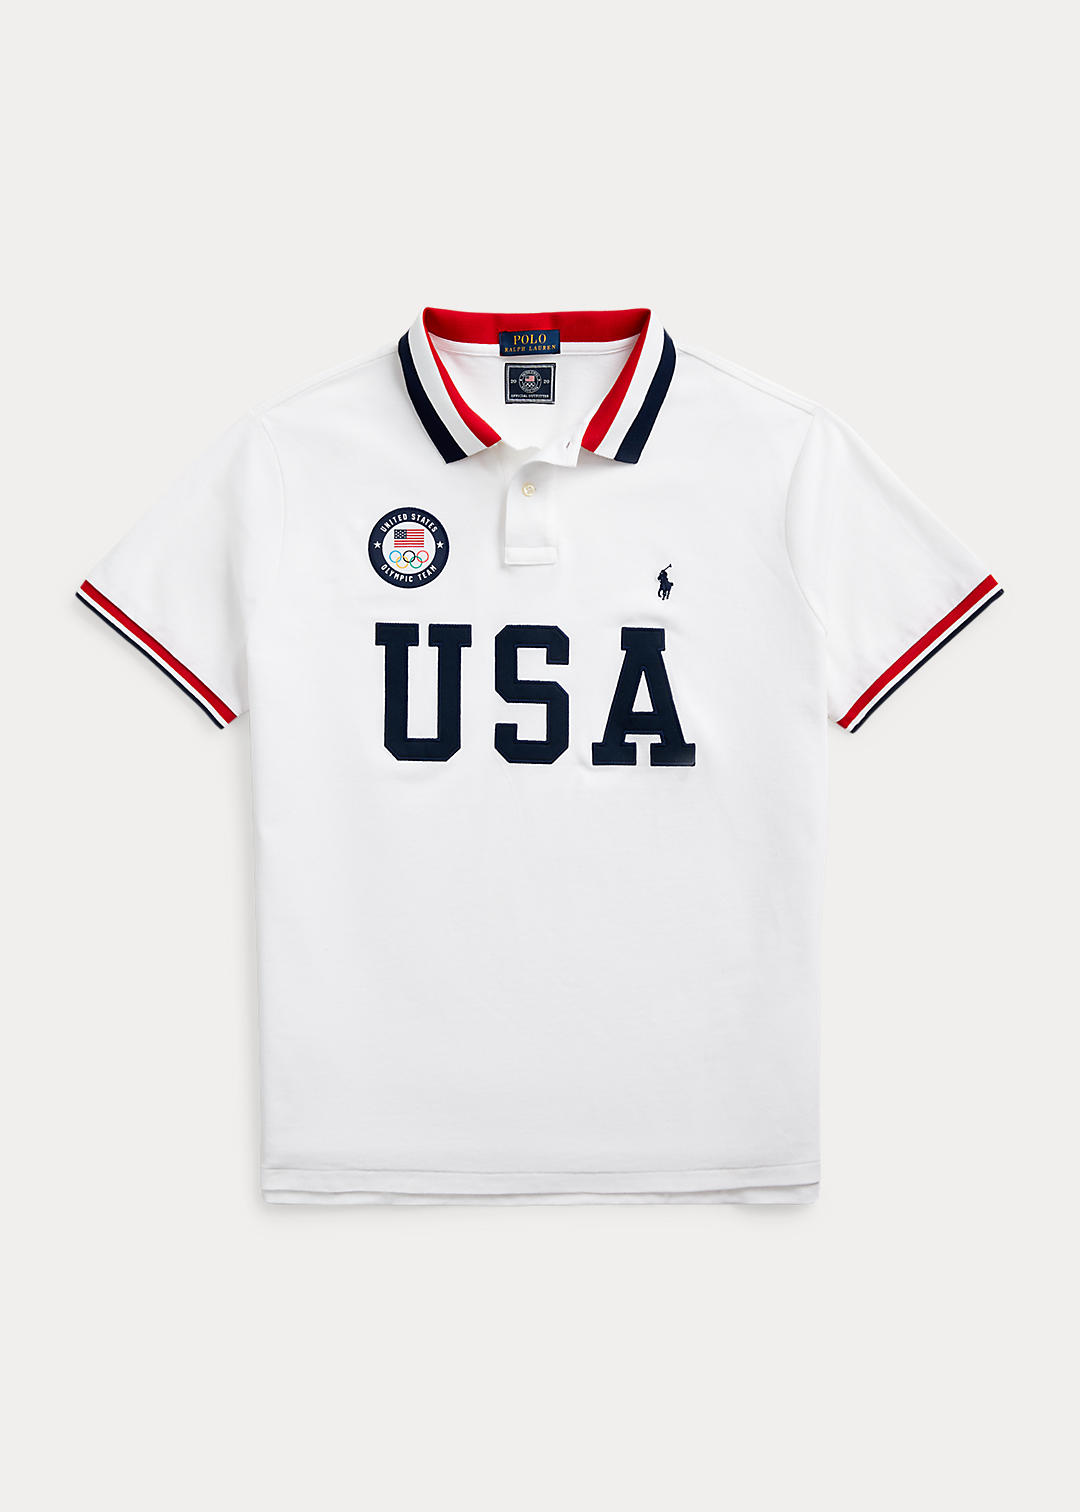 The Team USA Polo Shirt